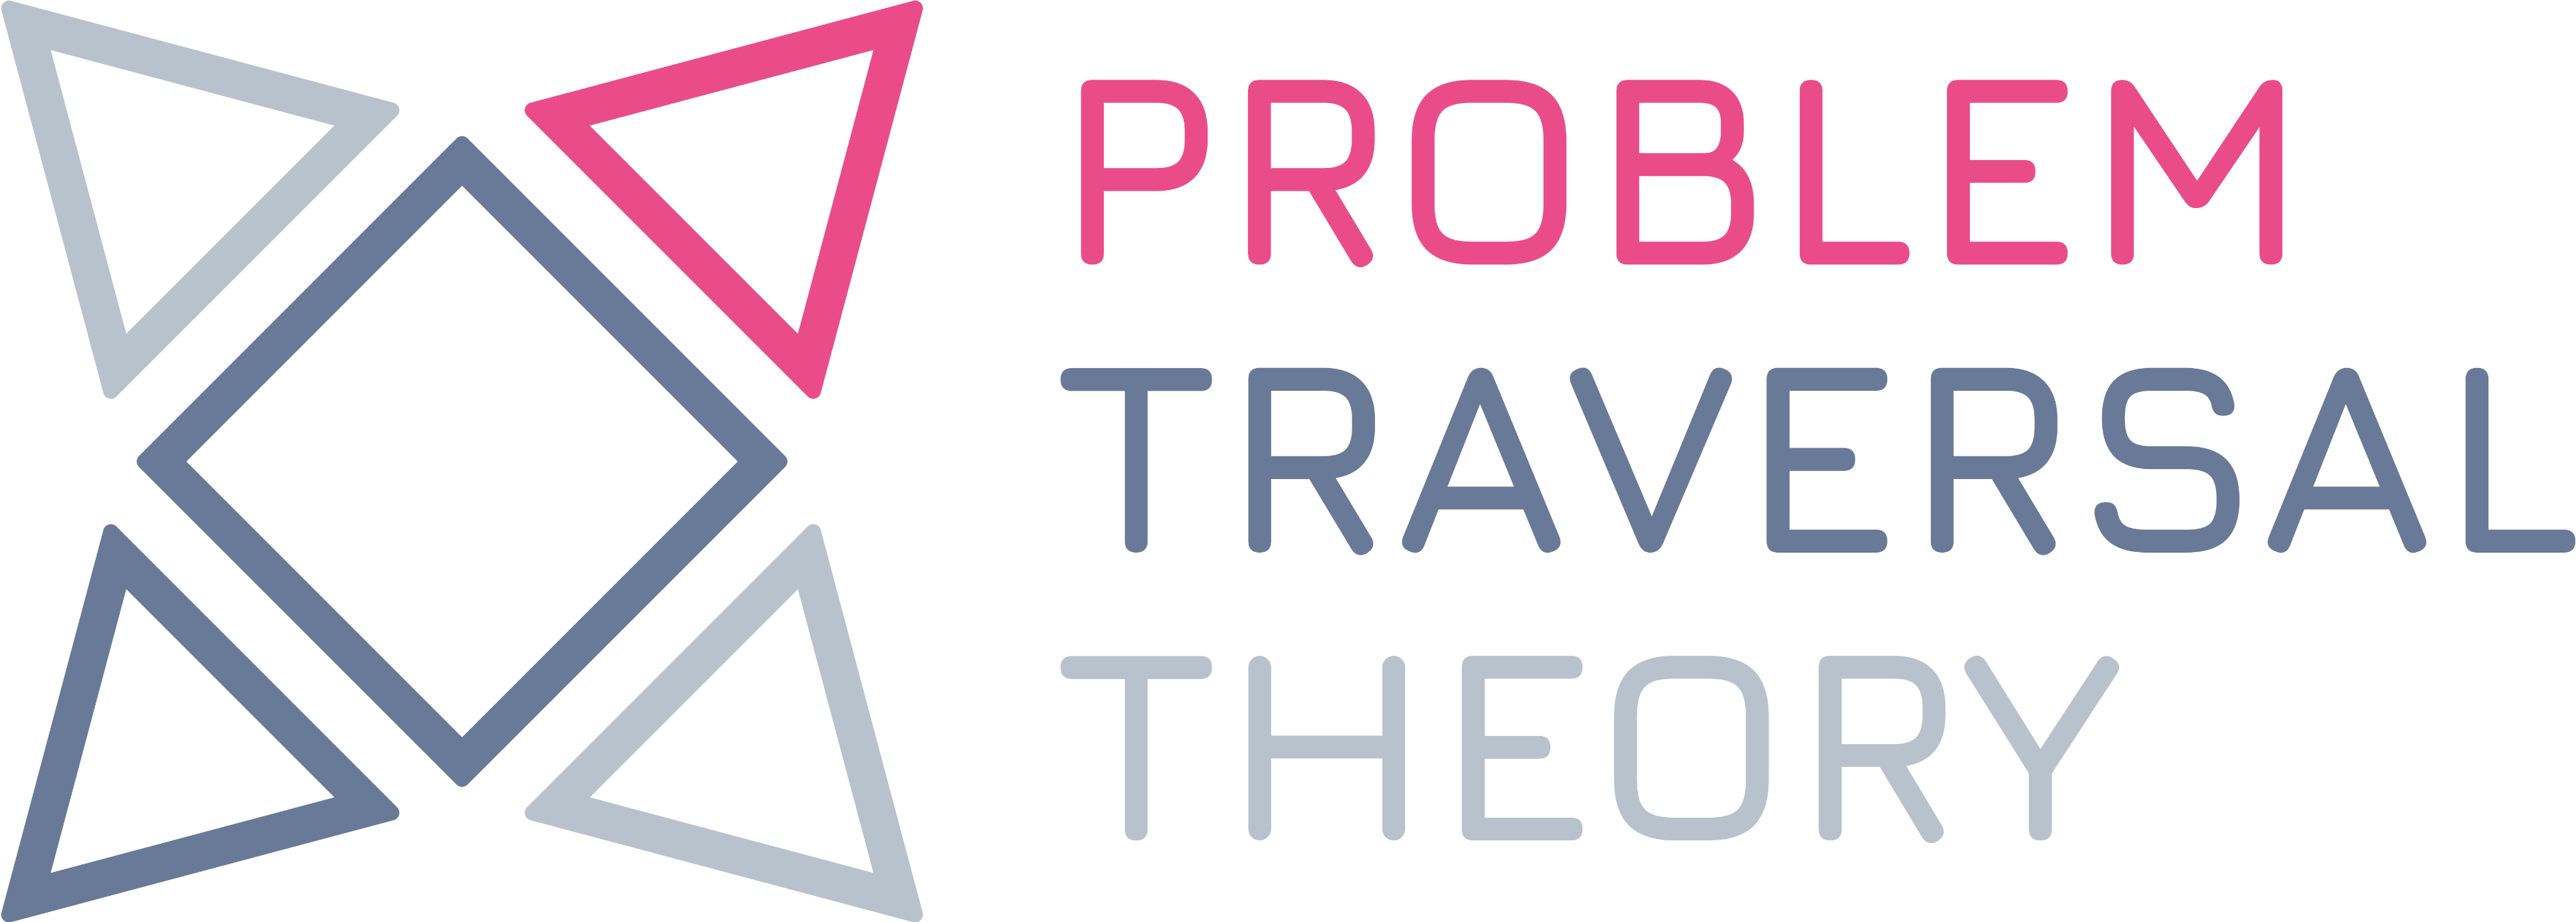 Problem Traversal Theory Logo